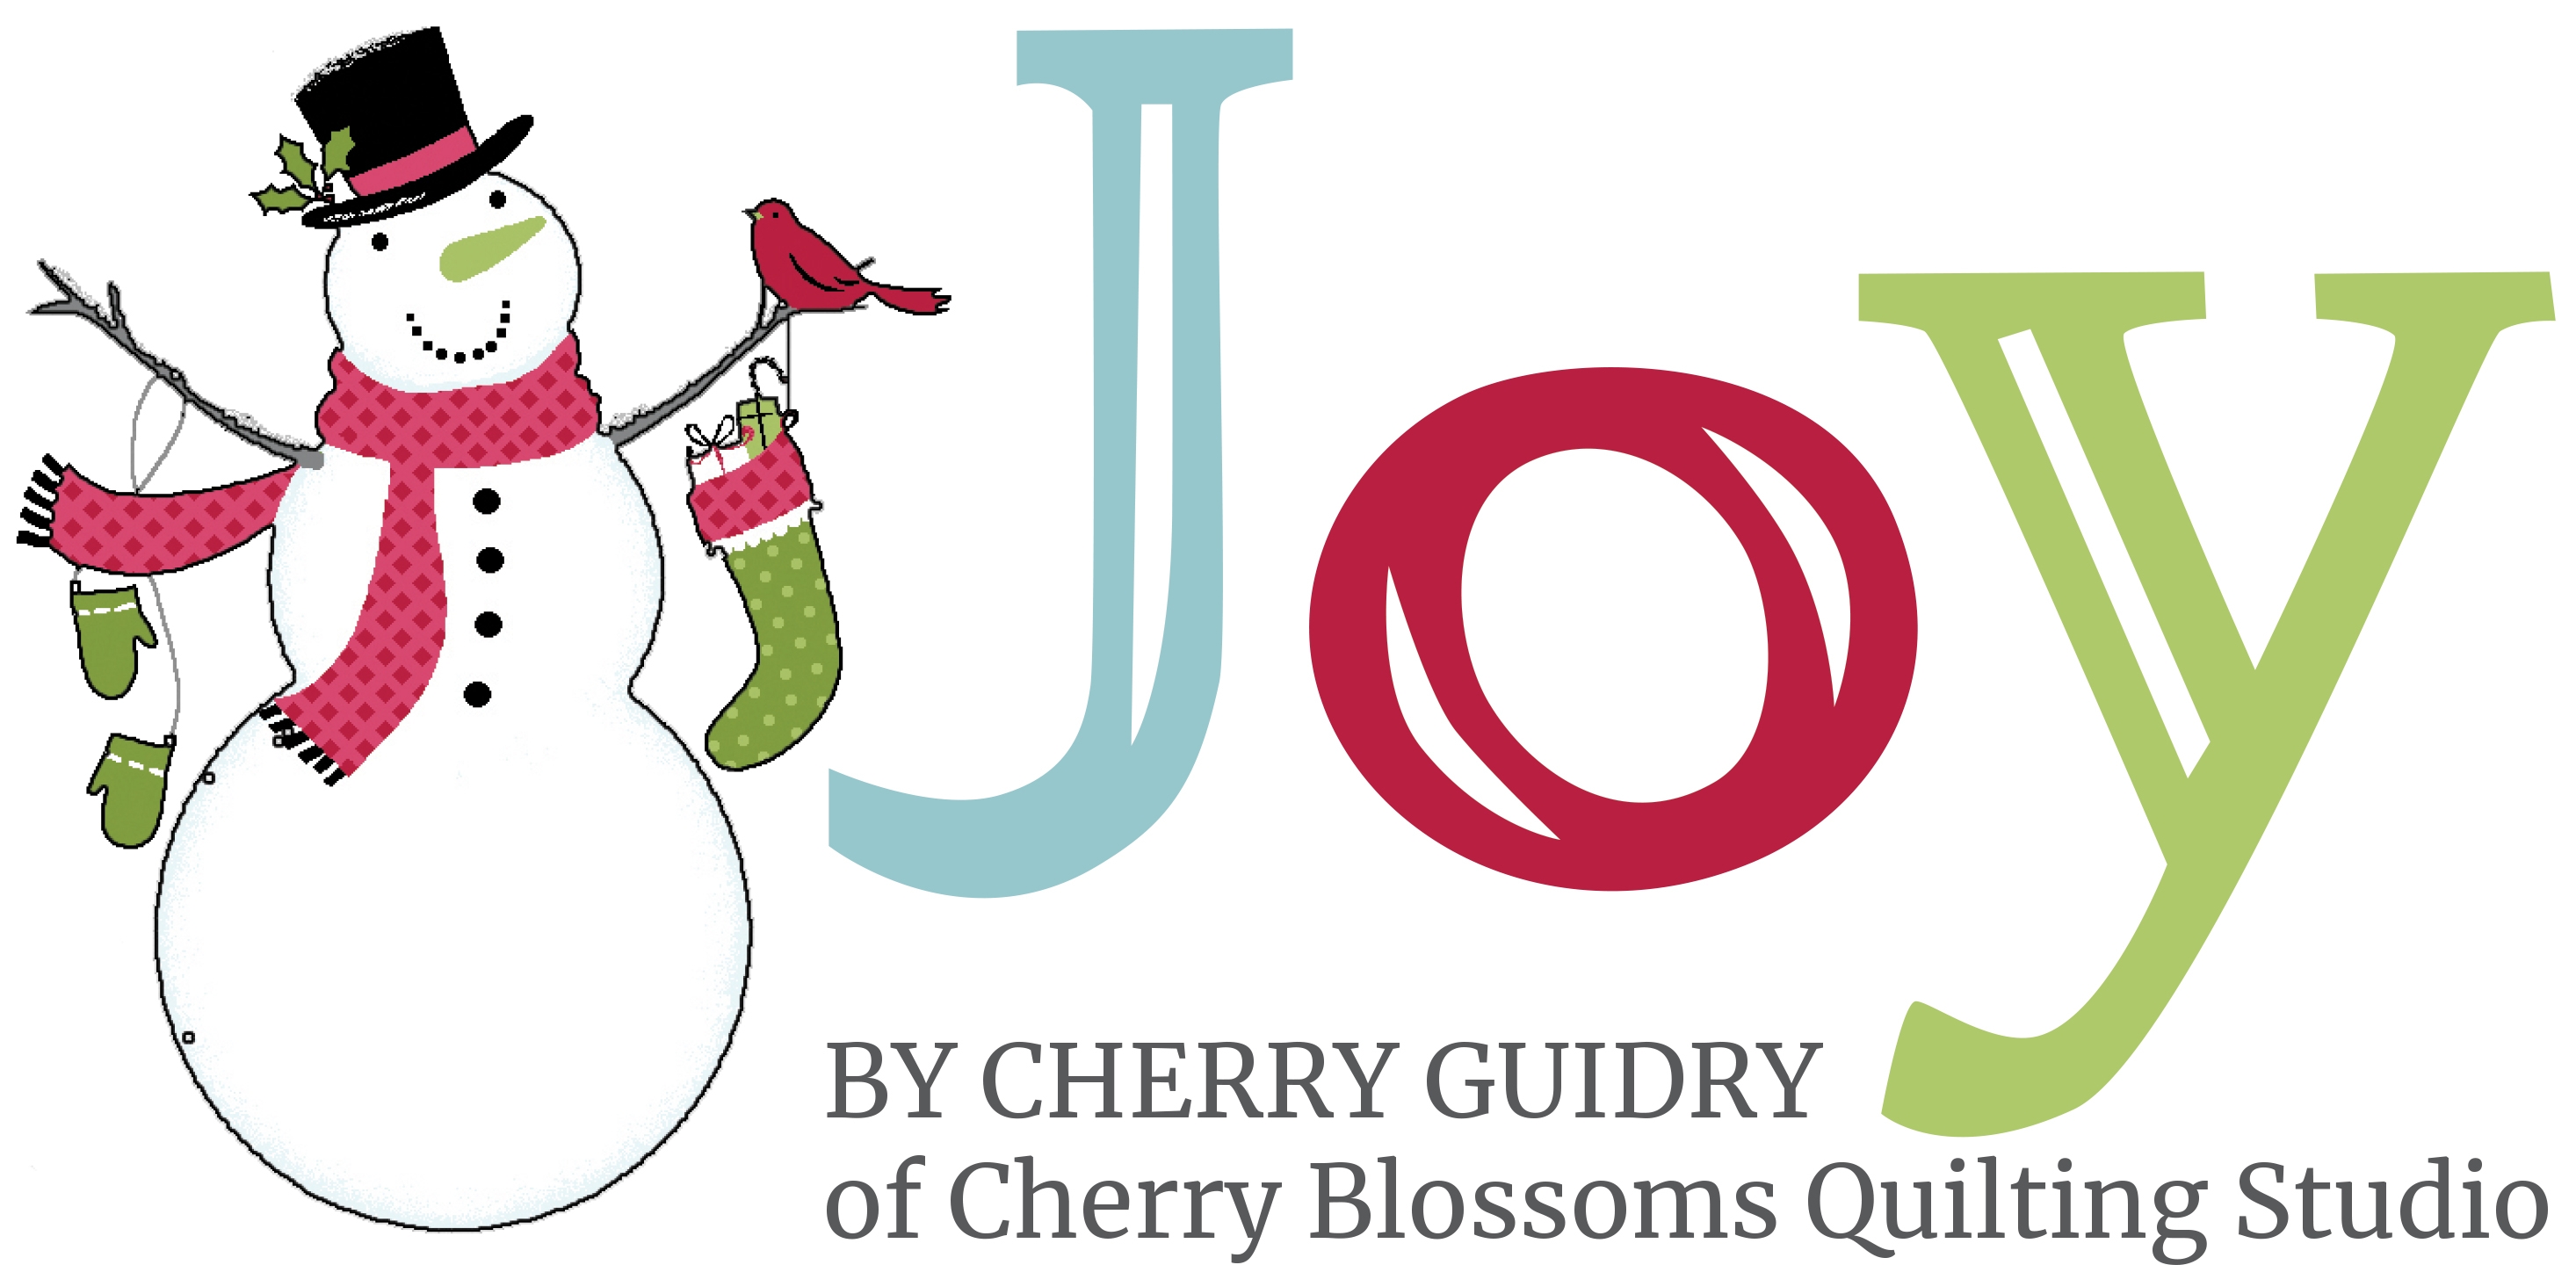 Joy by Cherry